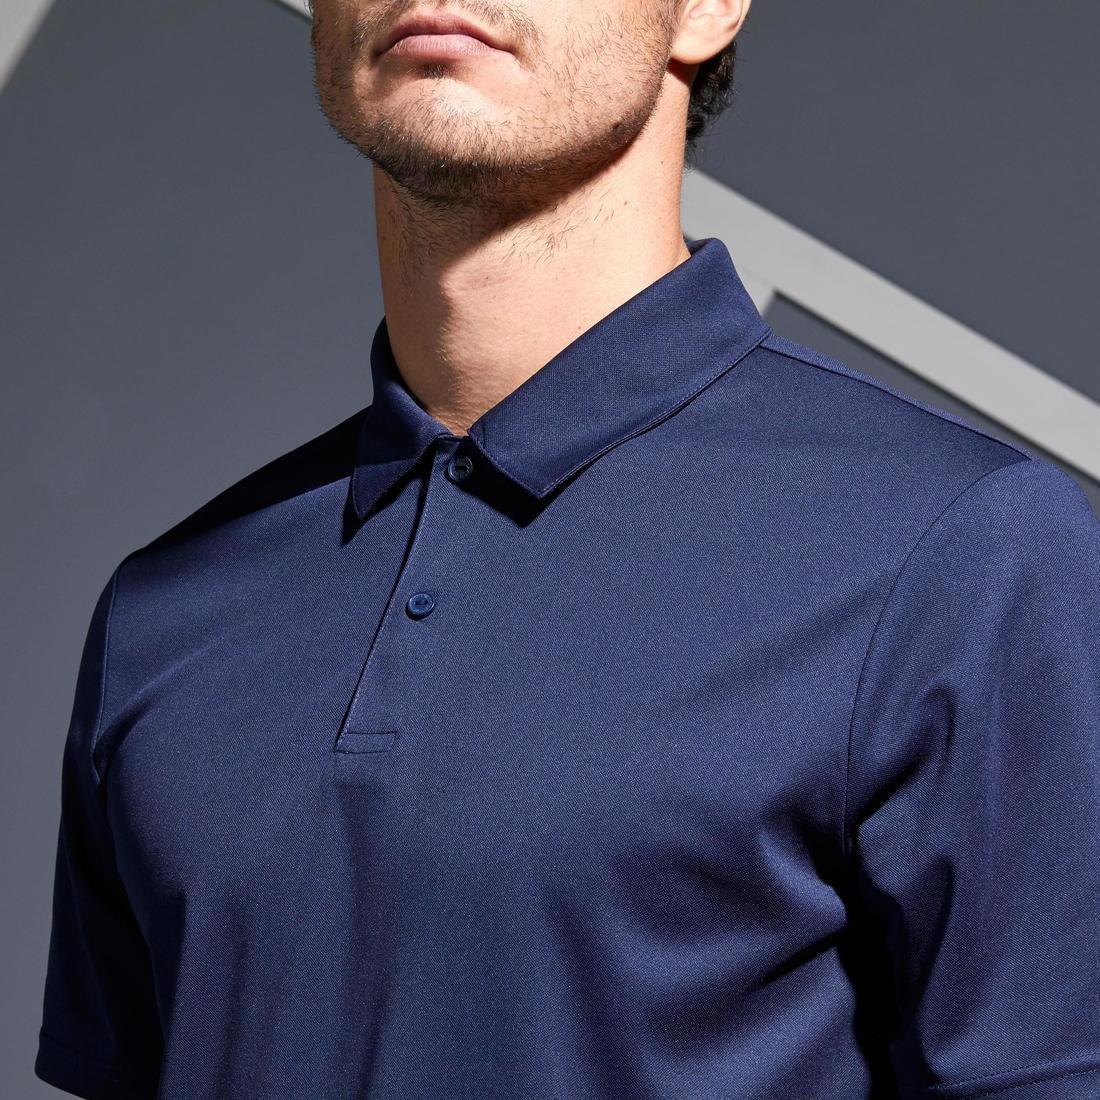 ARTENGO - Dry 100 Tennis Polo Shirt, Navy